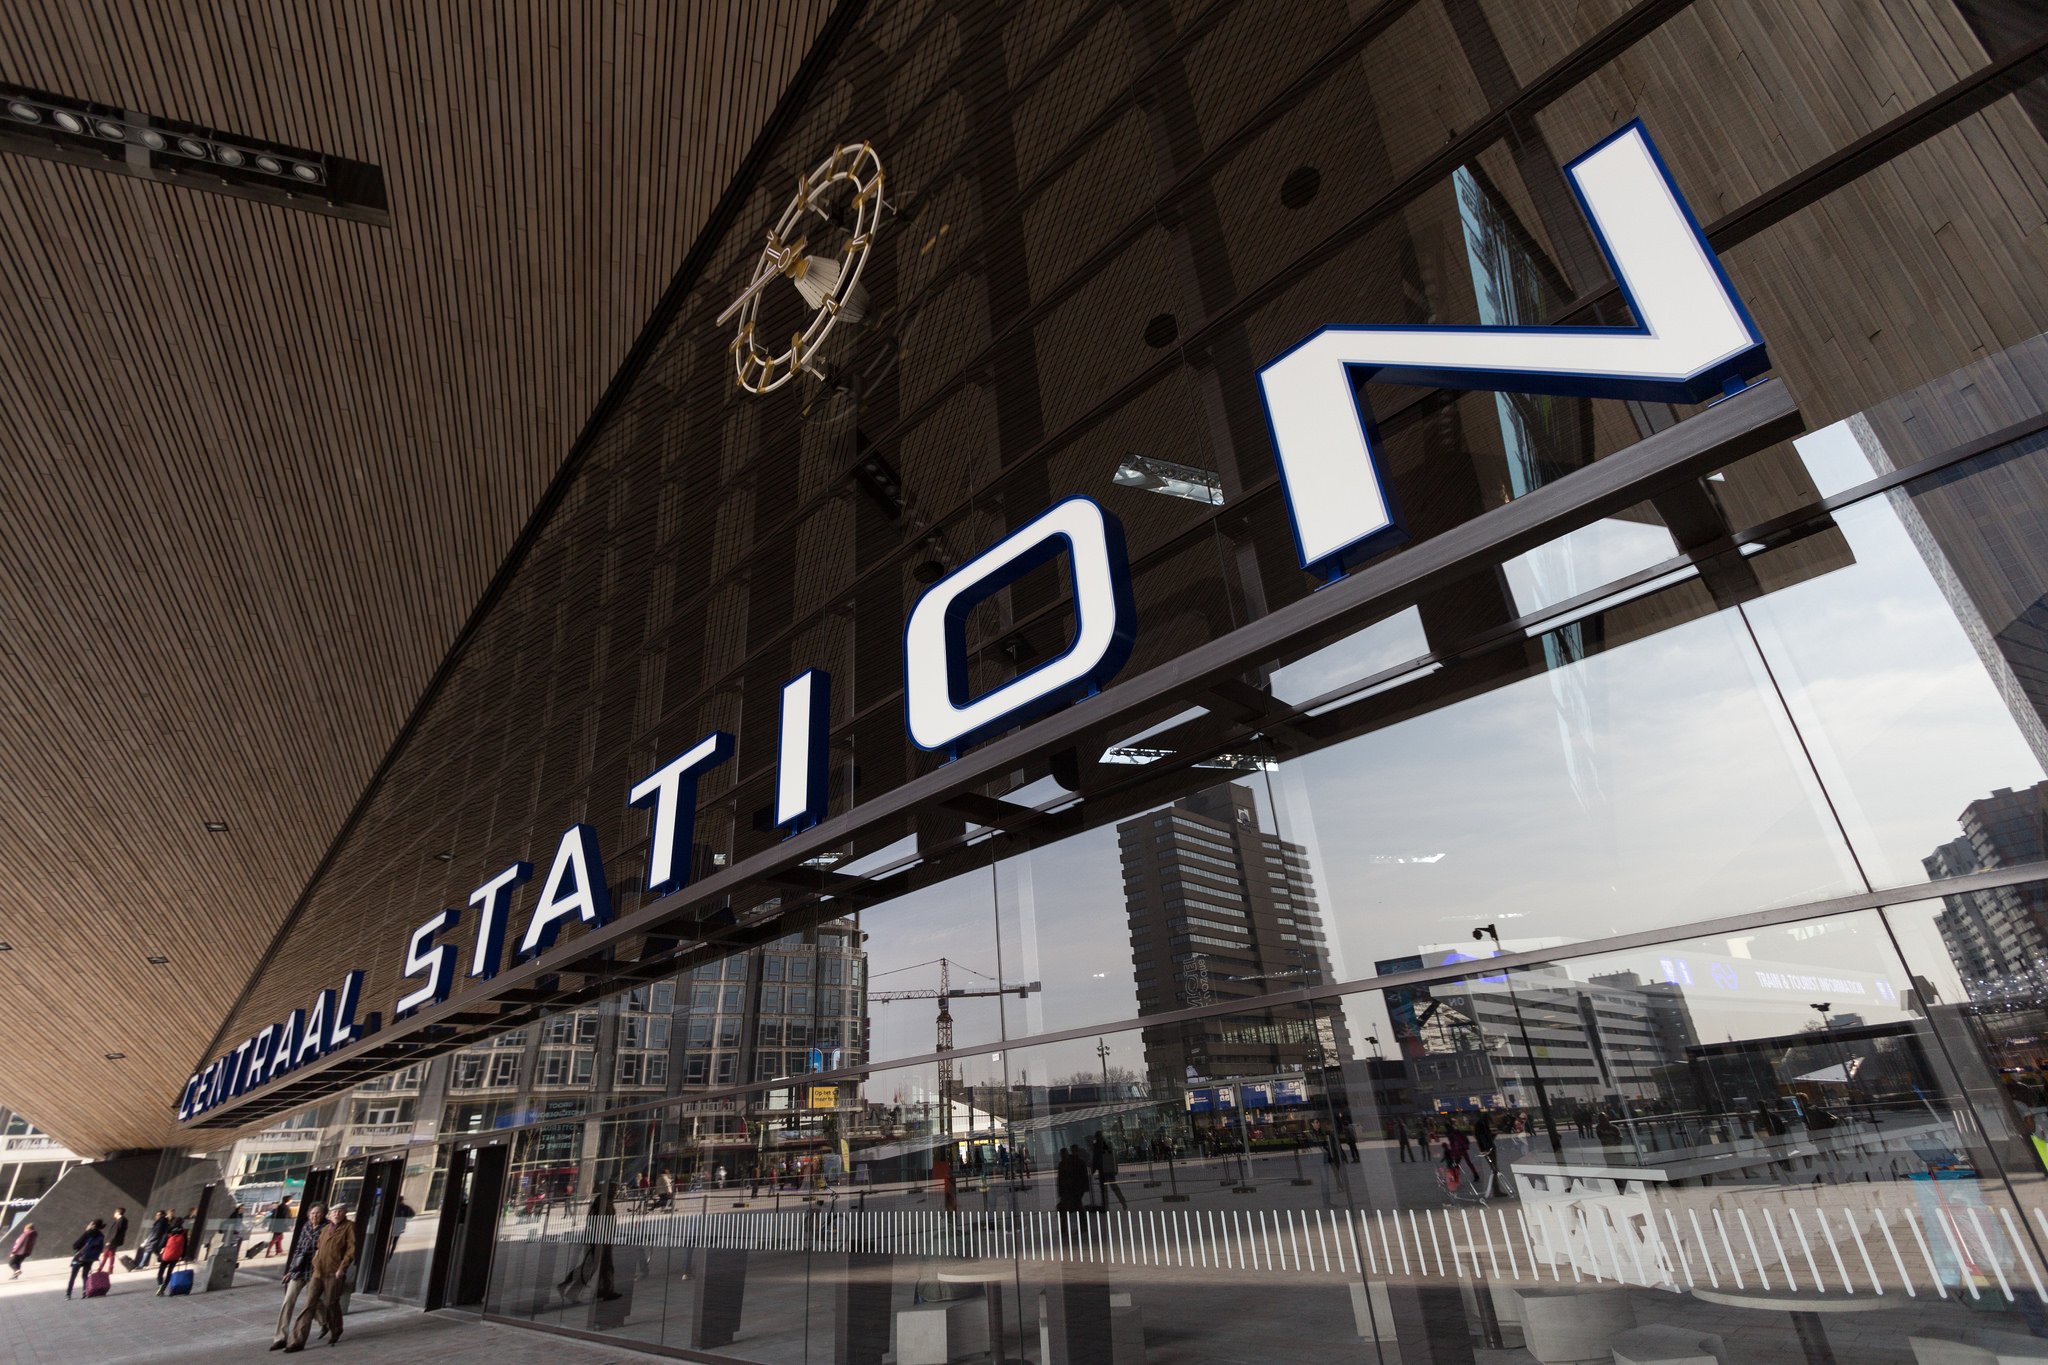 Rotterdam Centraal Station11